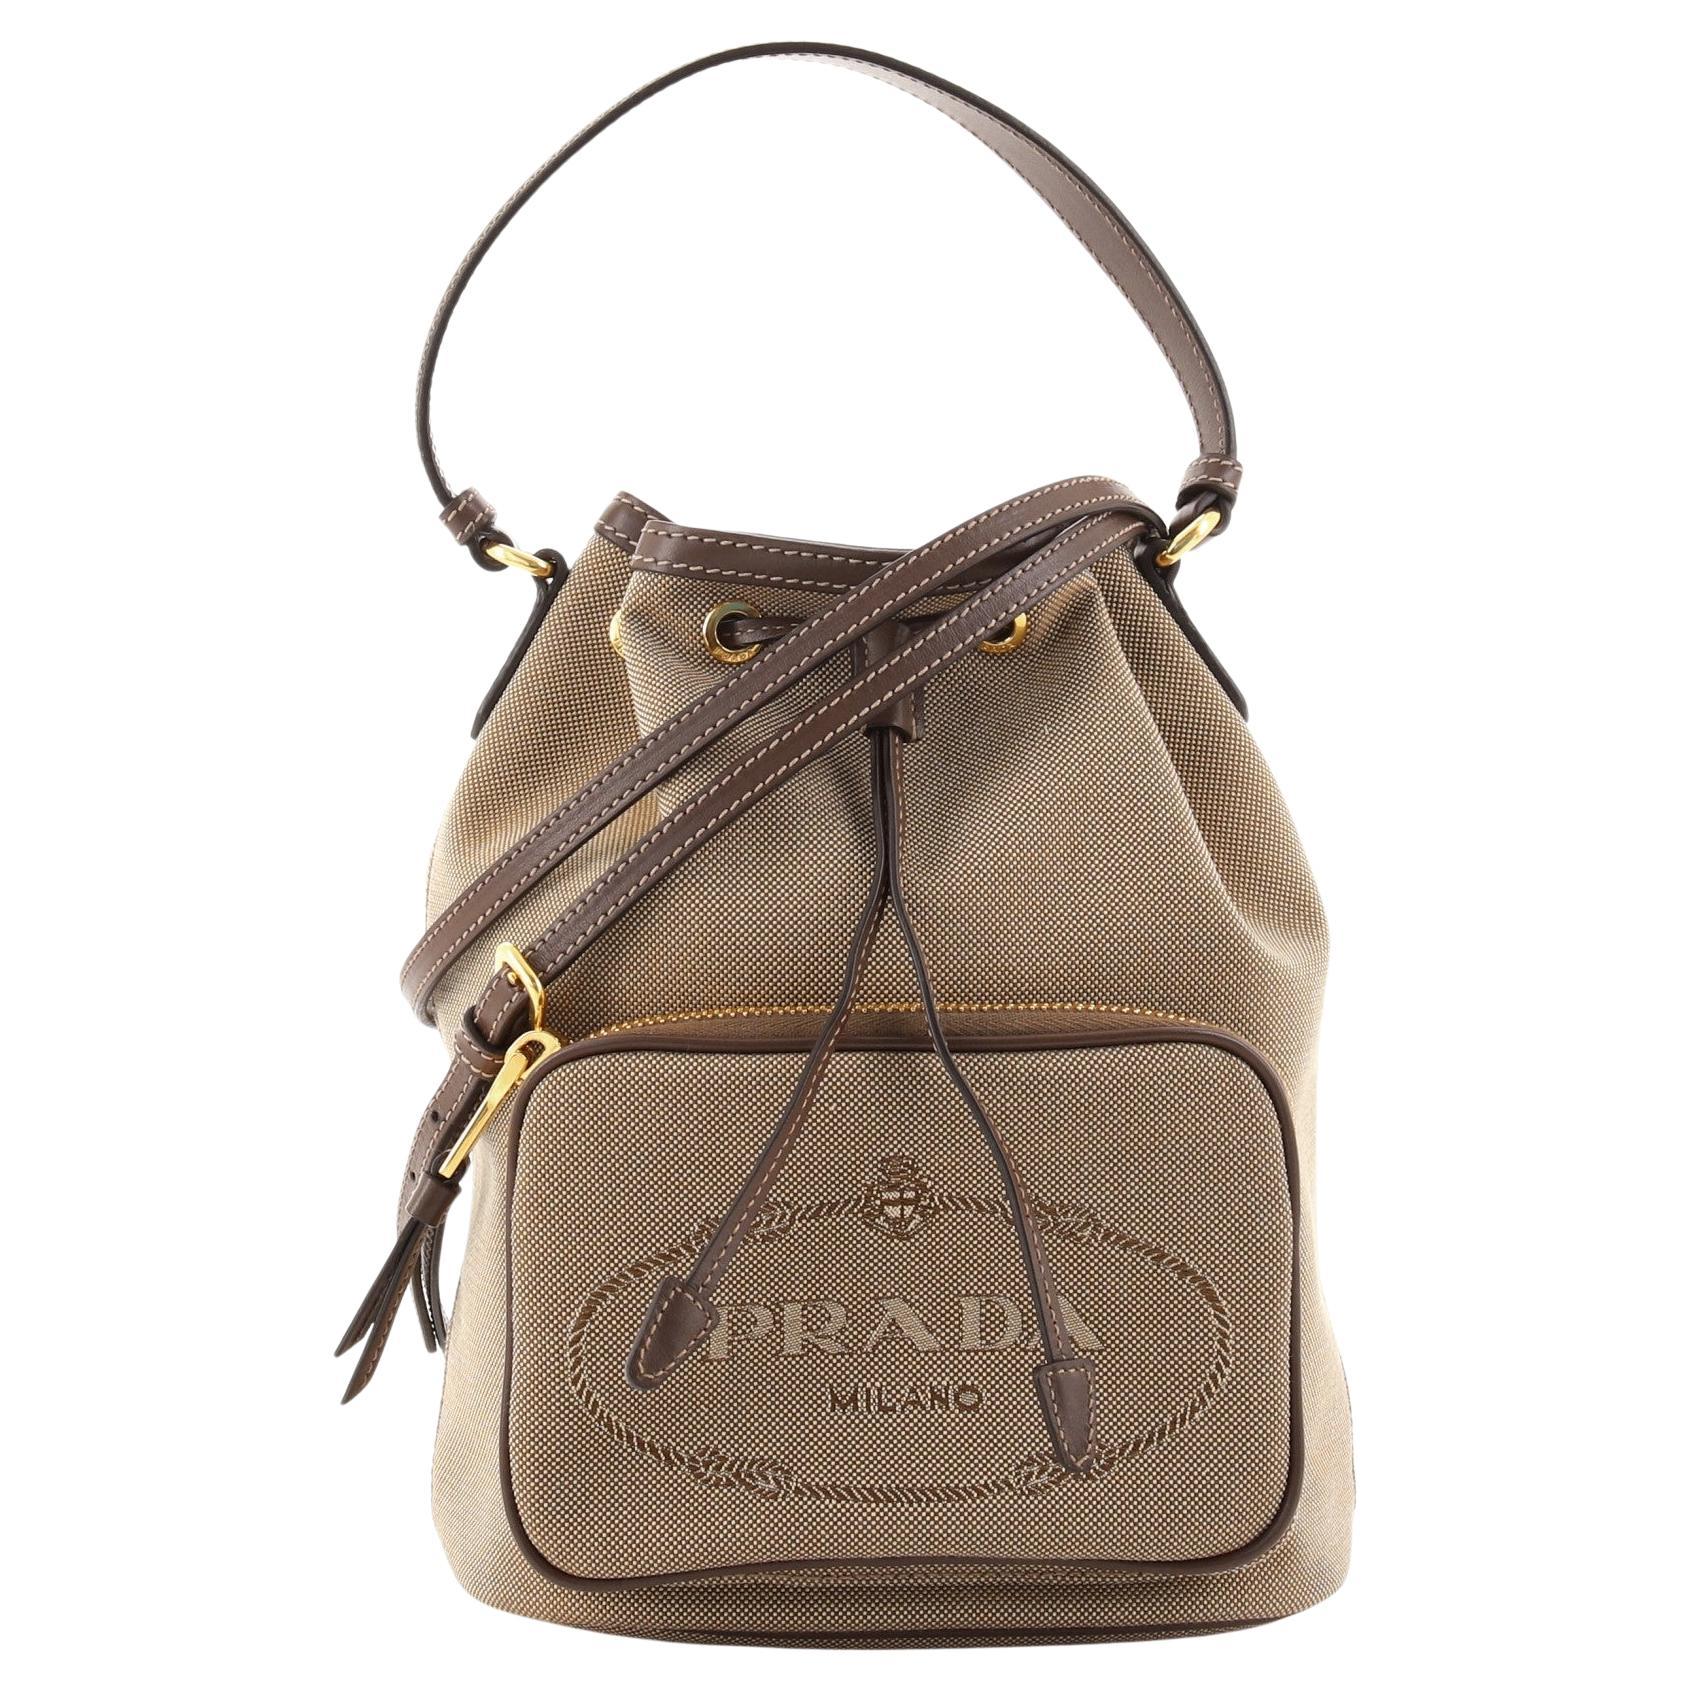 Prada Saffiano Leather Bucket Bag in Gray | Lyst